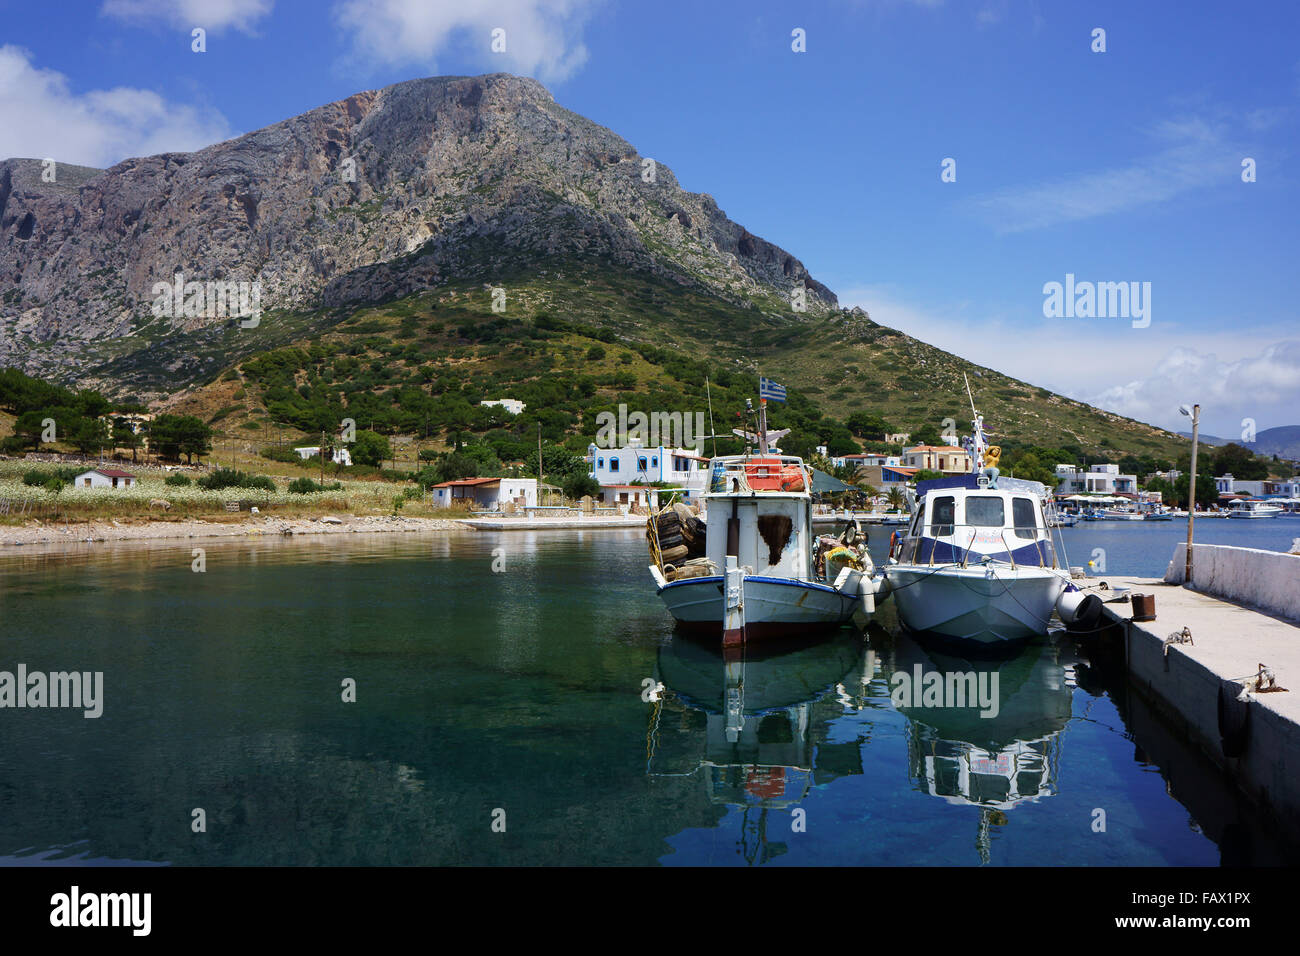 Harbor and town Telendos, island Telendos, Dodekanes islands, Greece Stock Photo